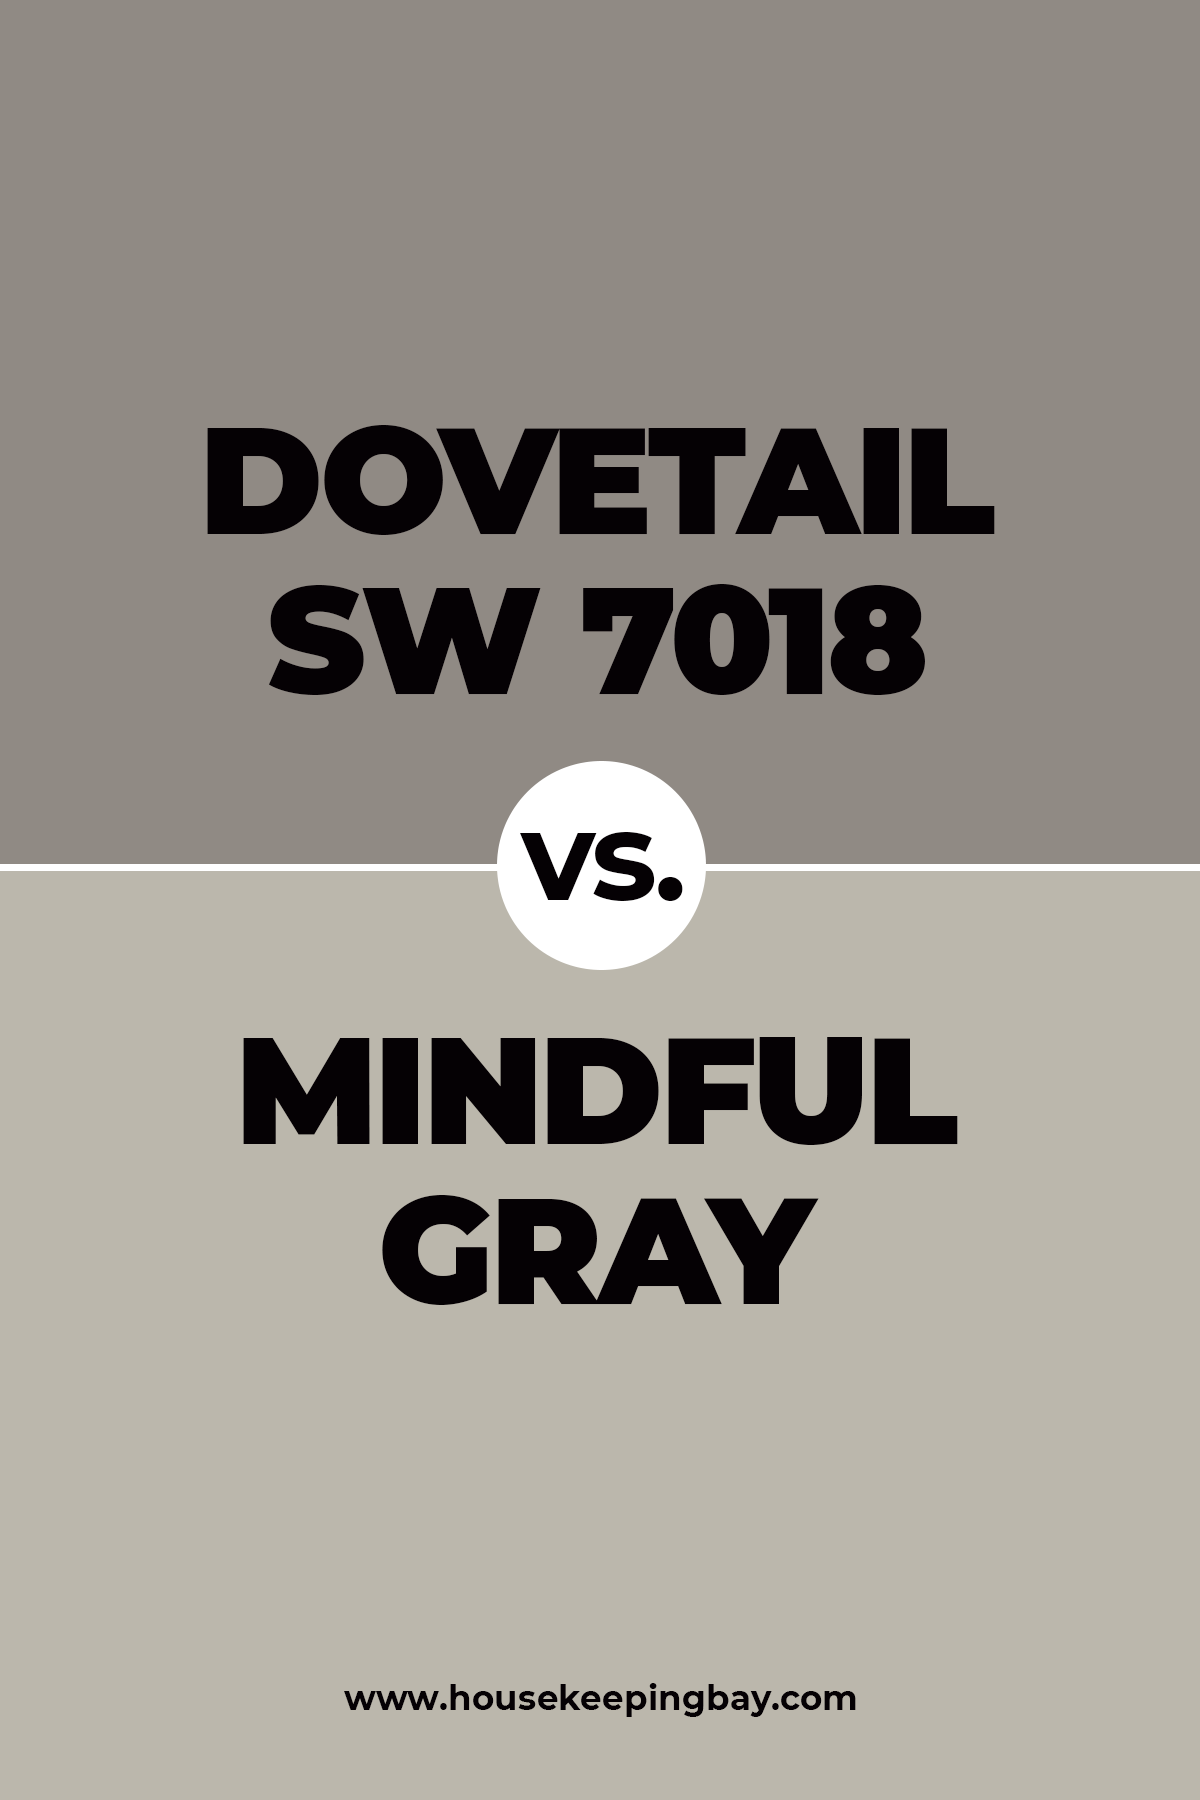 Dovetail vs Mindful gray